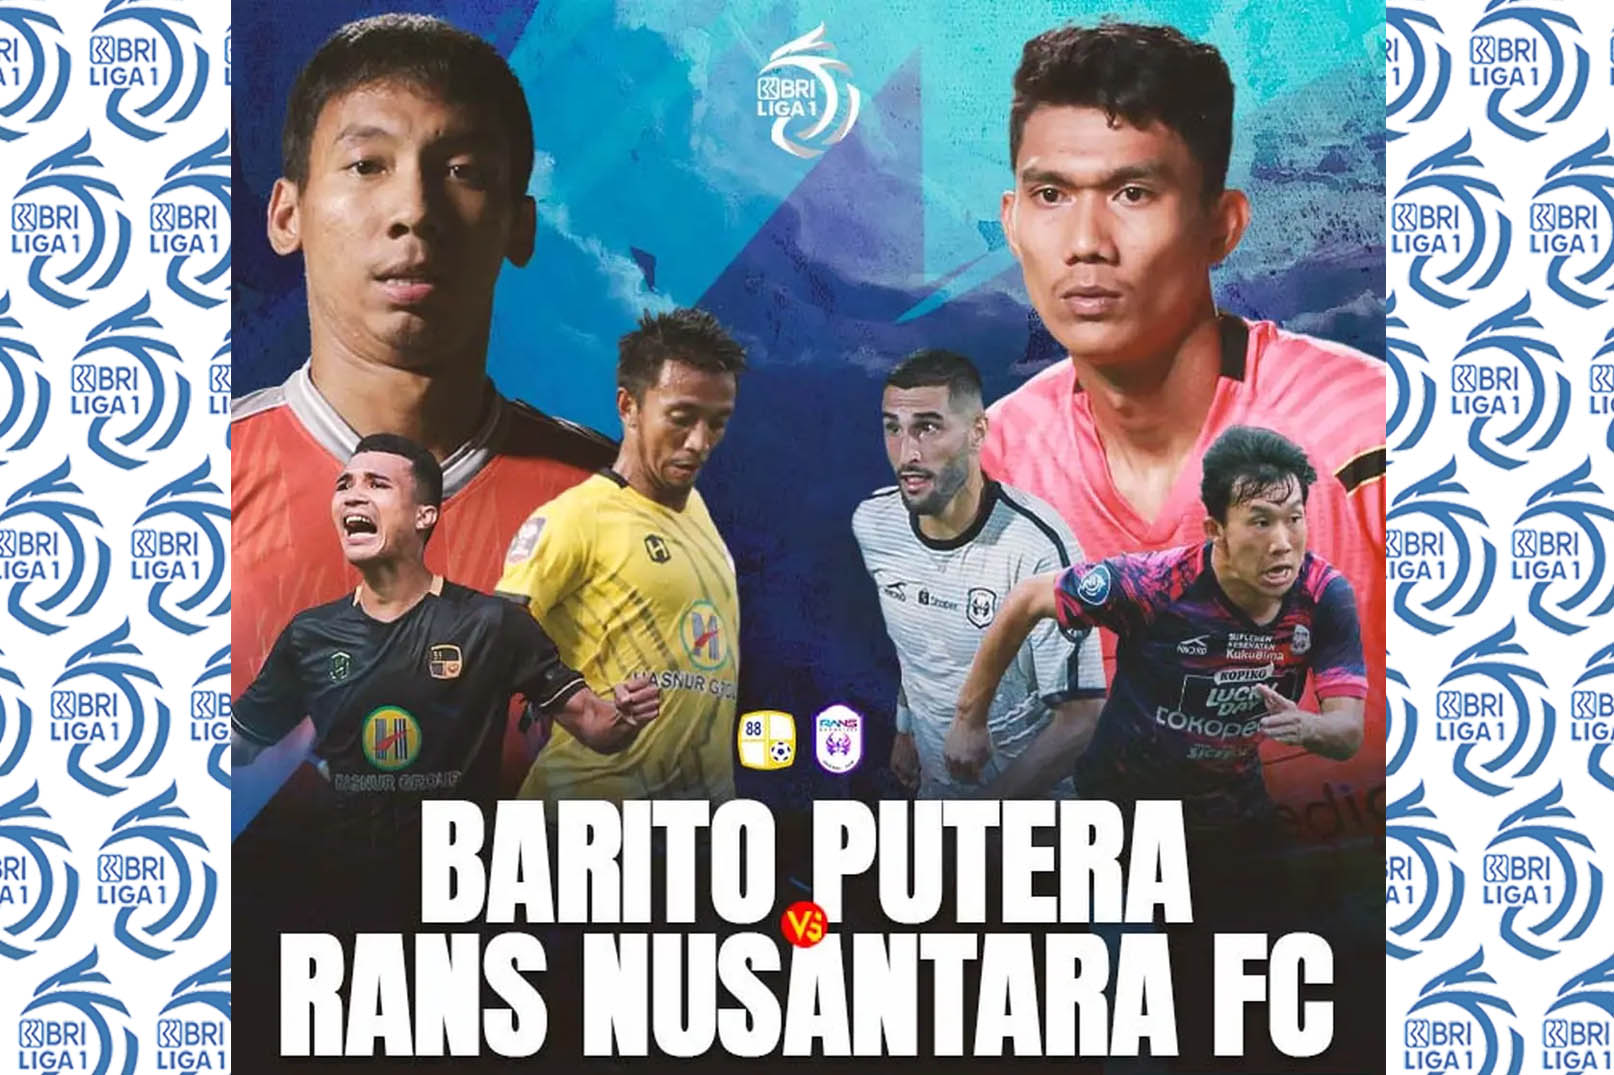 Prediksi Barito Putera Vs Rans Nusantara BRI Liga 1 Pekan 14, H2H Serta Link Nonton